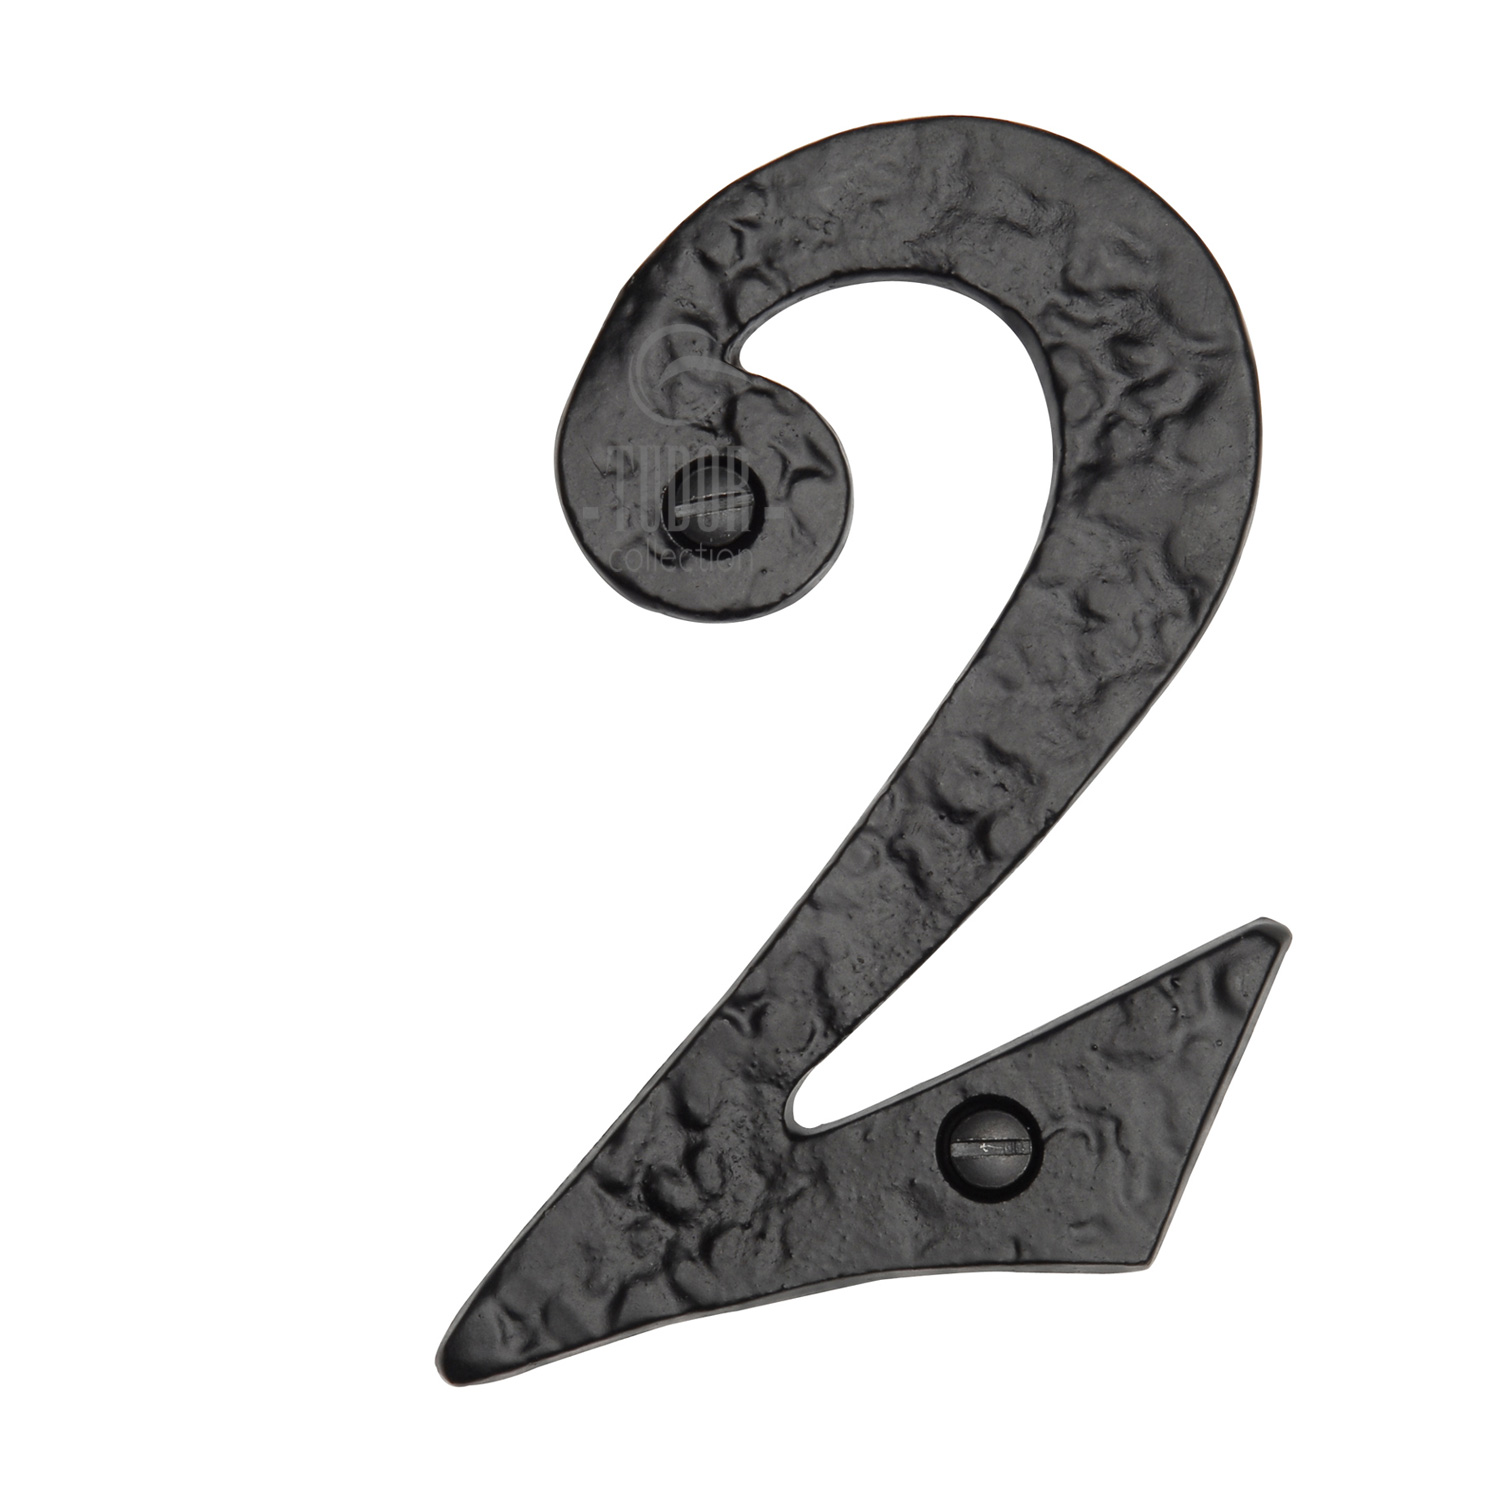 The Tudor Numeral 2 - 4" Black Iron